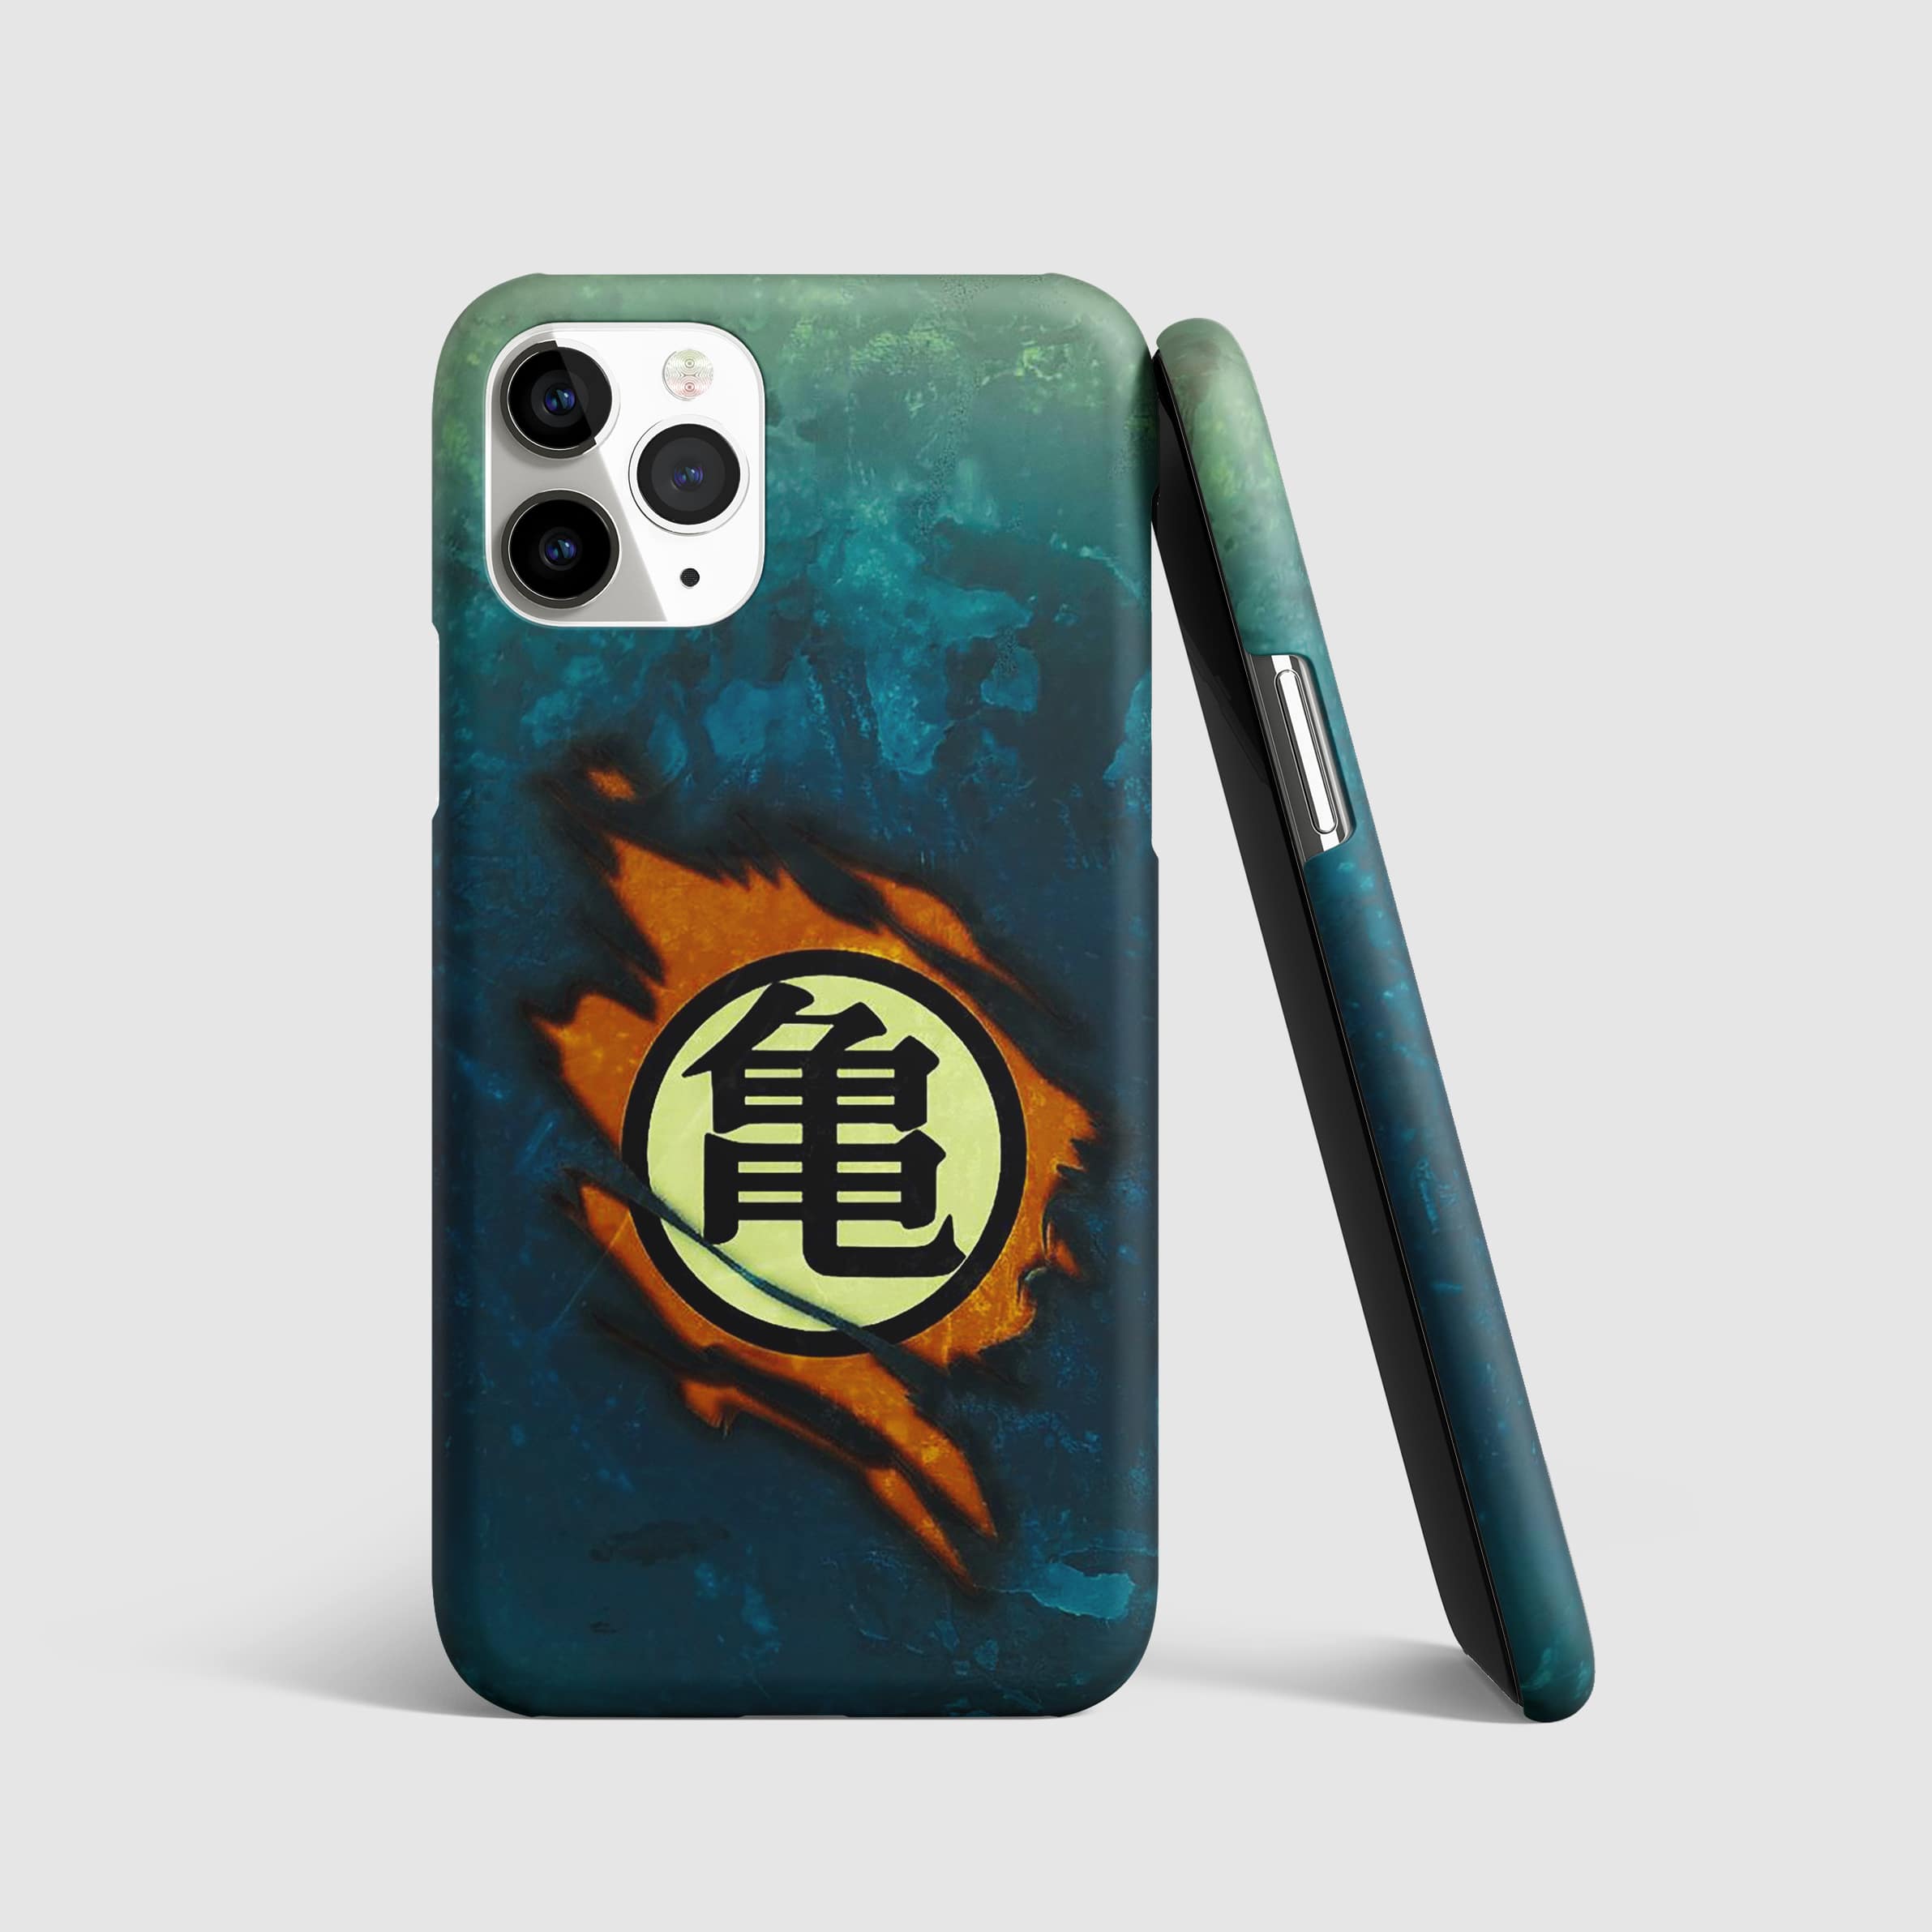 Goku's training symbol on minimalist phone cover.